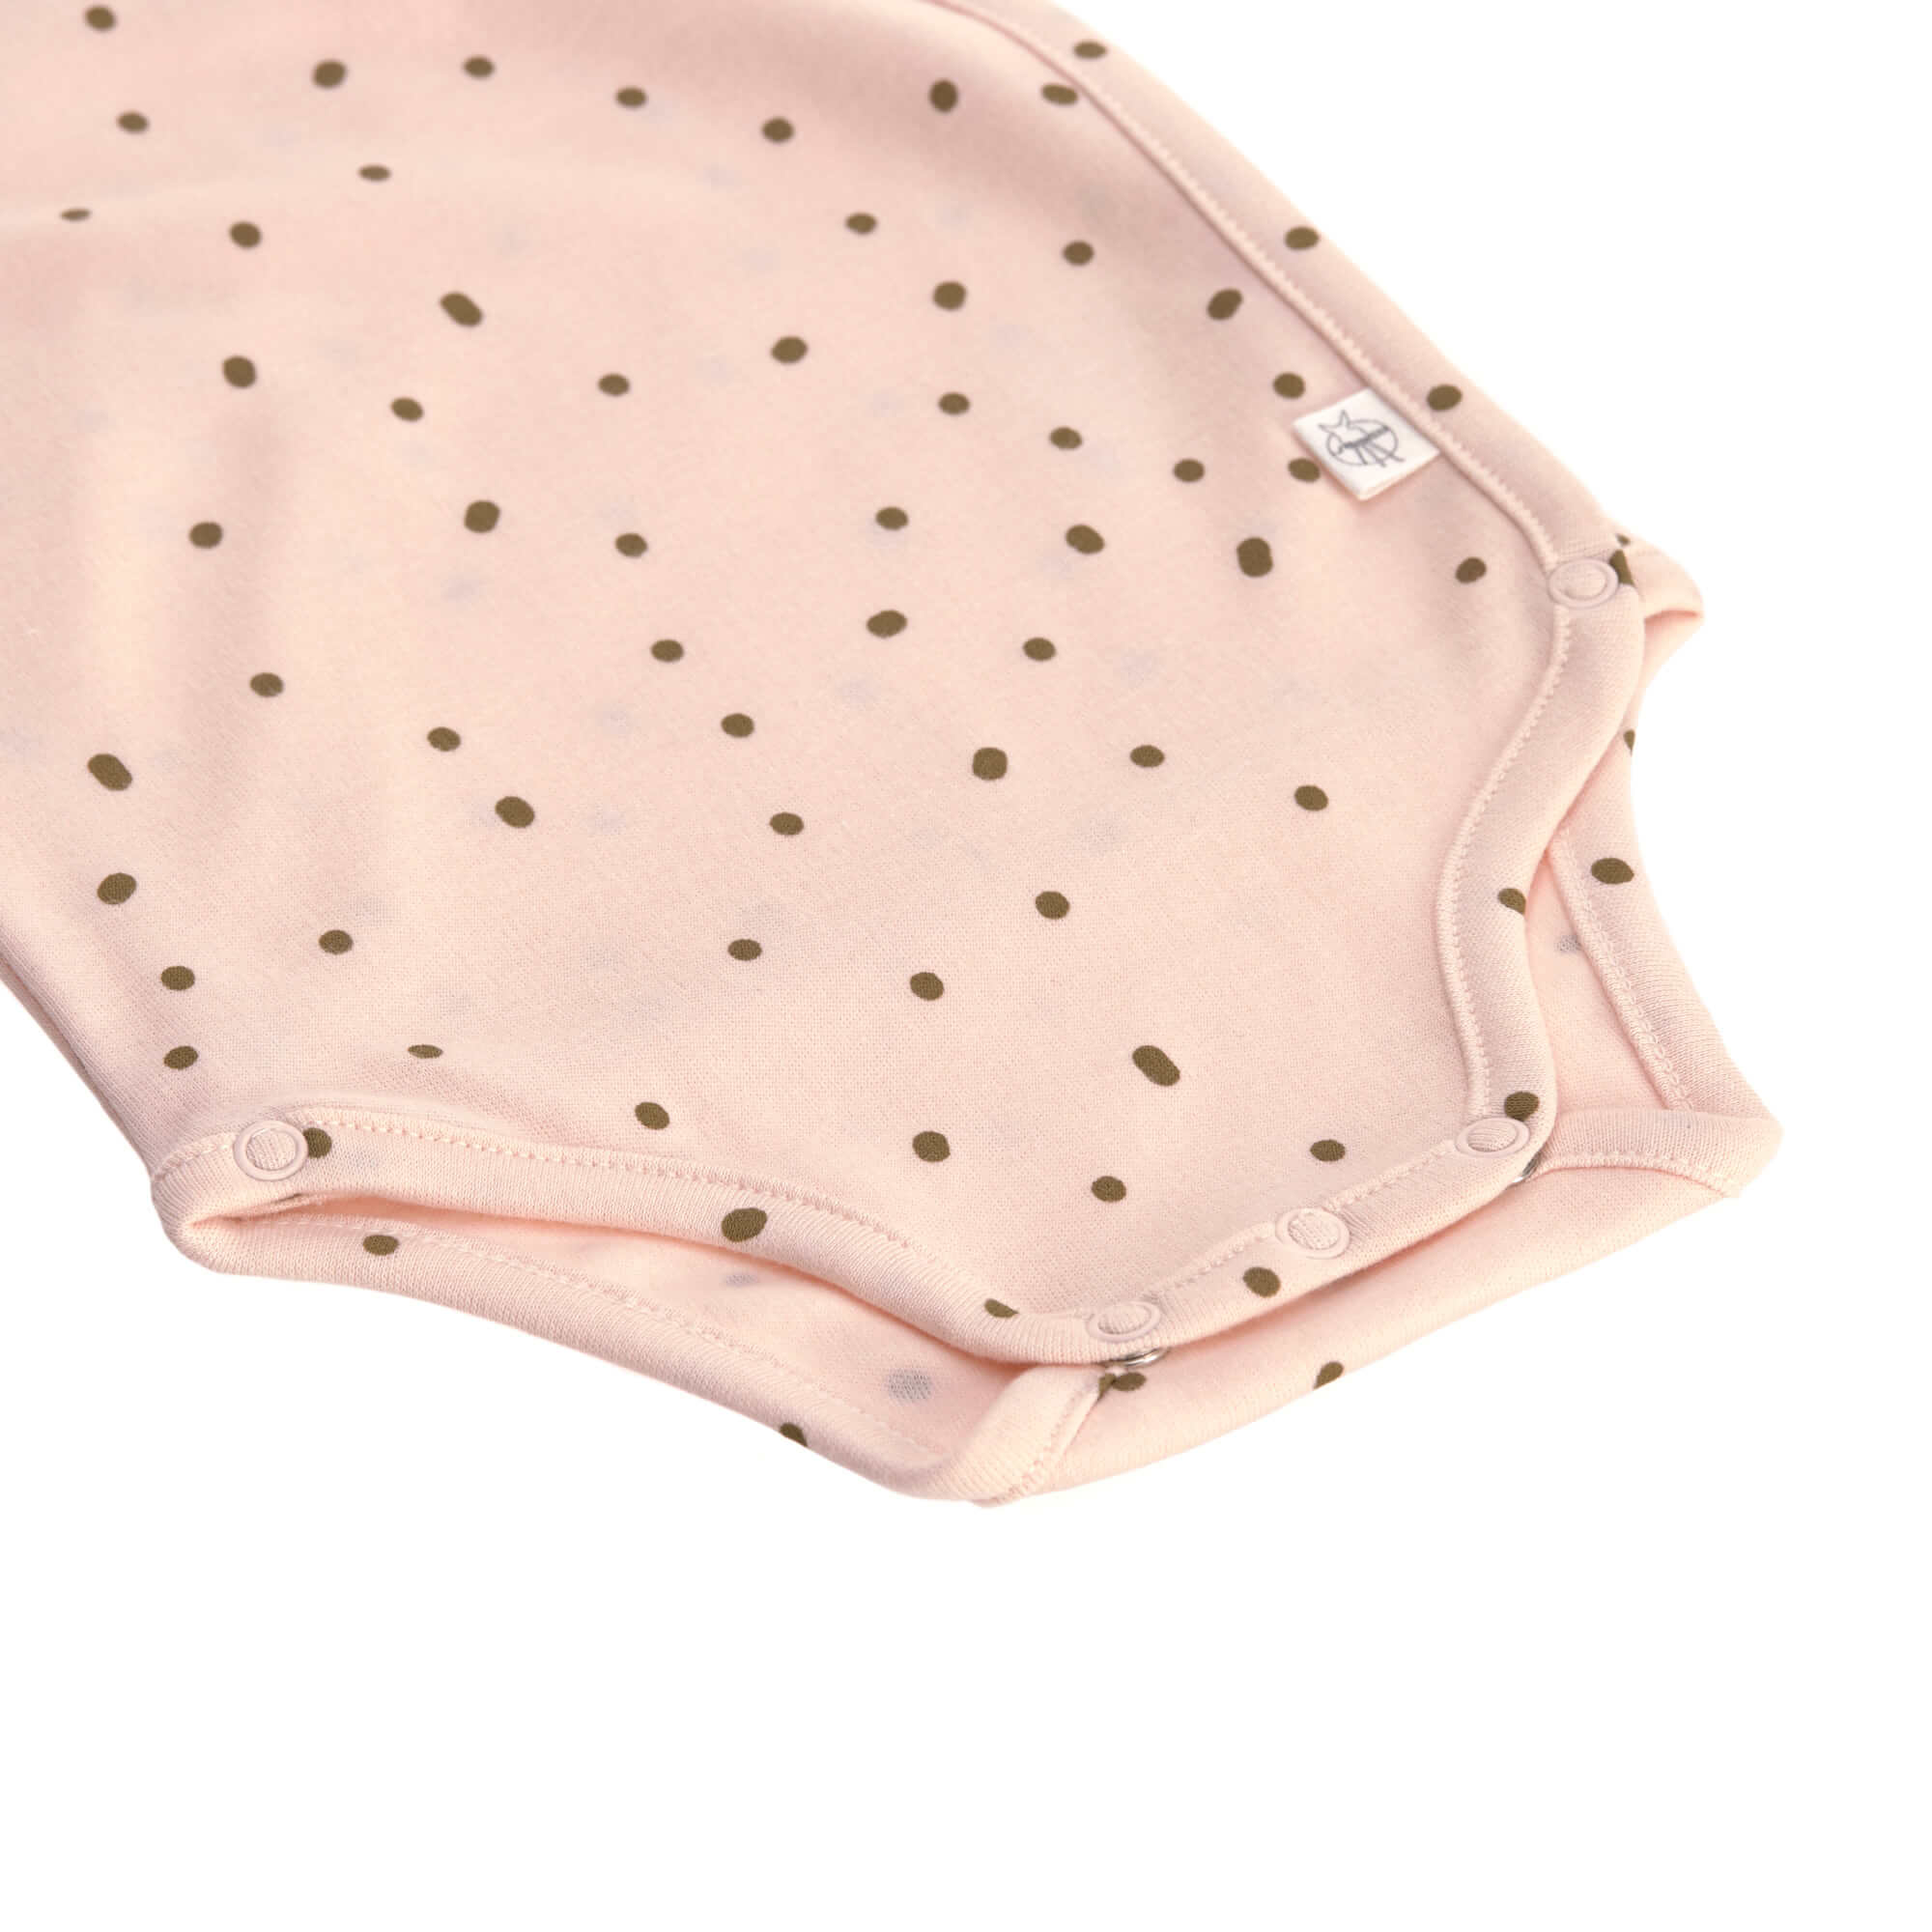 Langarm Baby-Body GOTS "Dots Pink Powder"